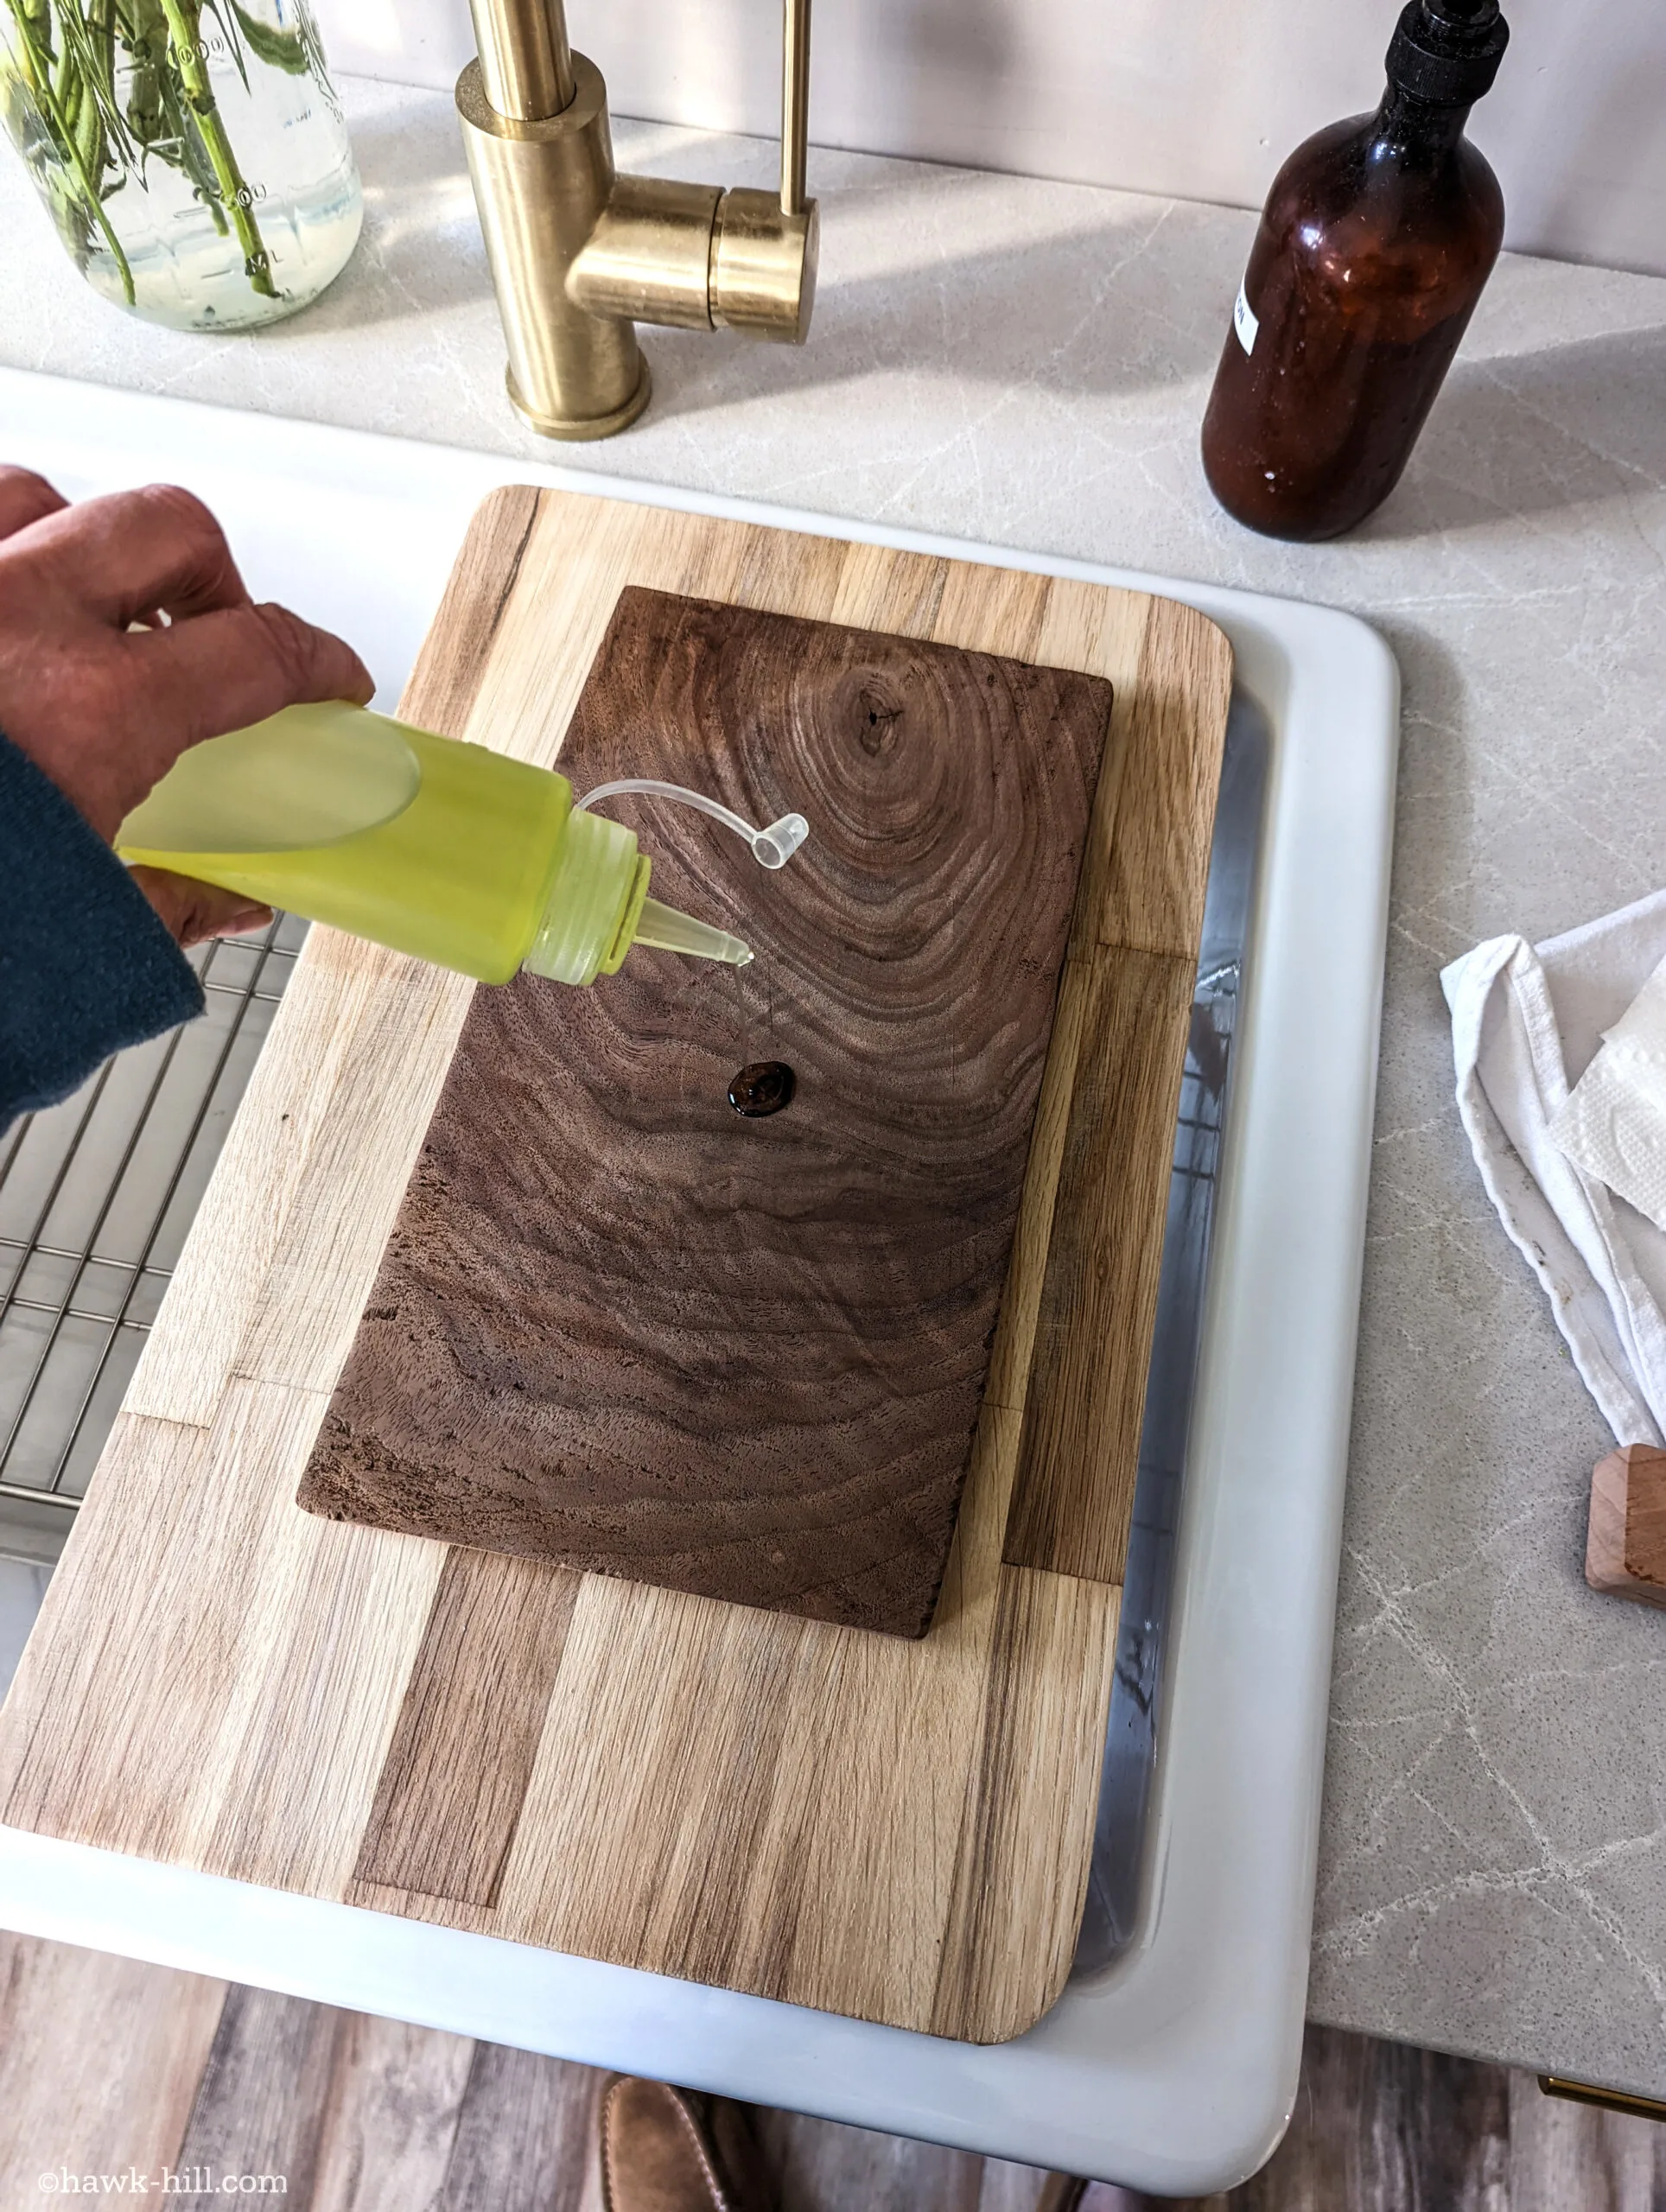 Dripping grape seed oil onto a handmade walnut cheese board.